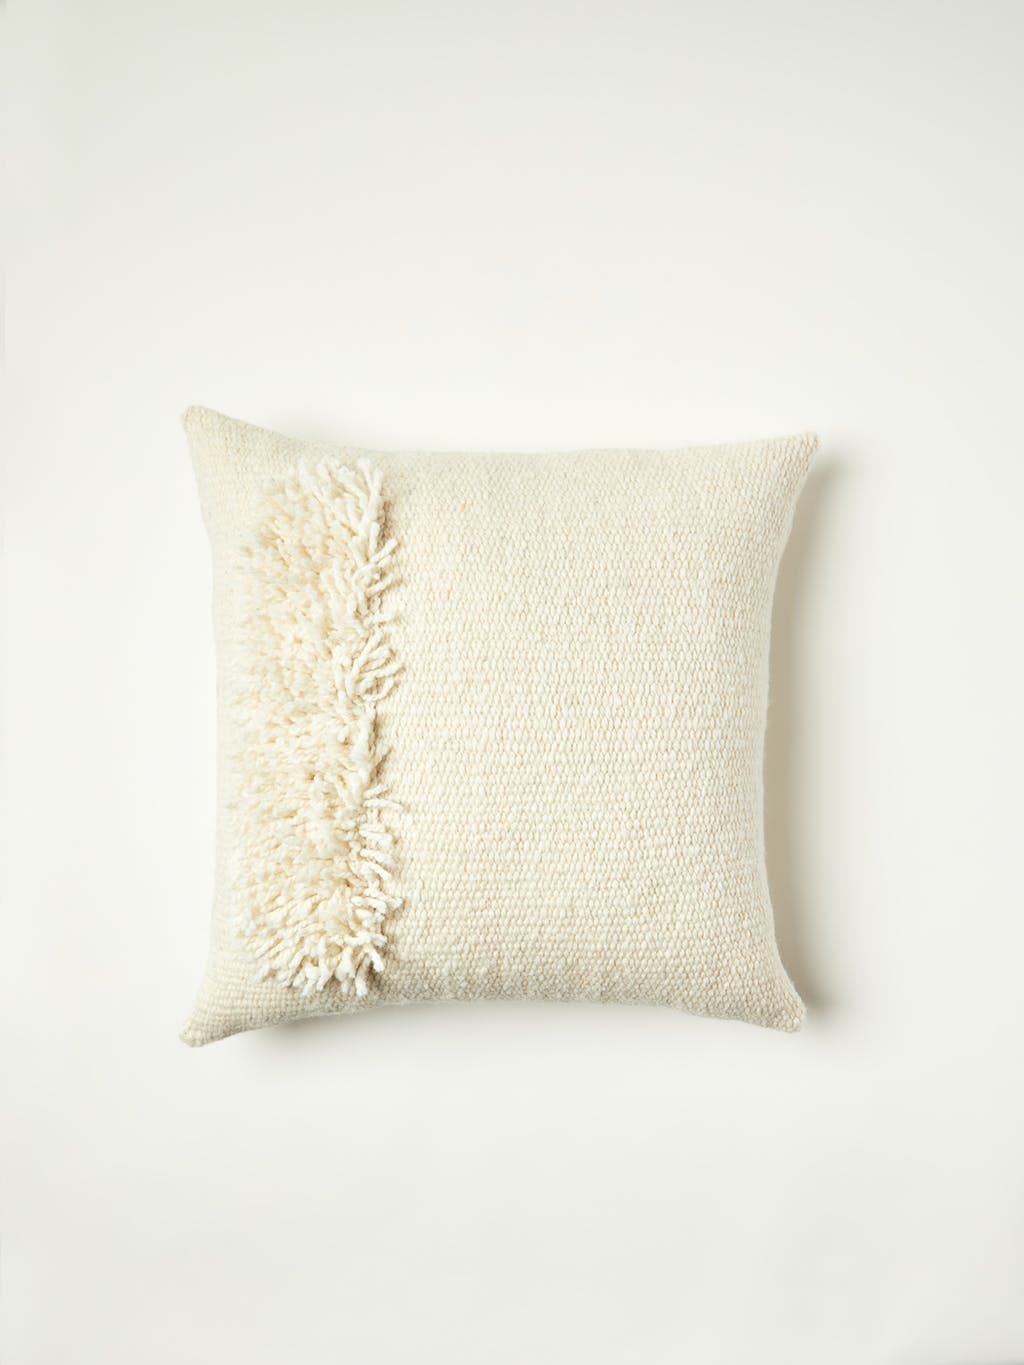 Zona Handwoven Pillow Cover